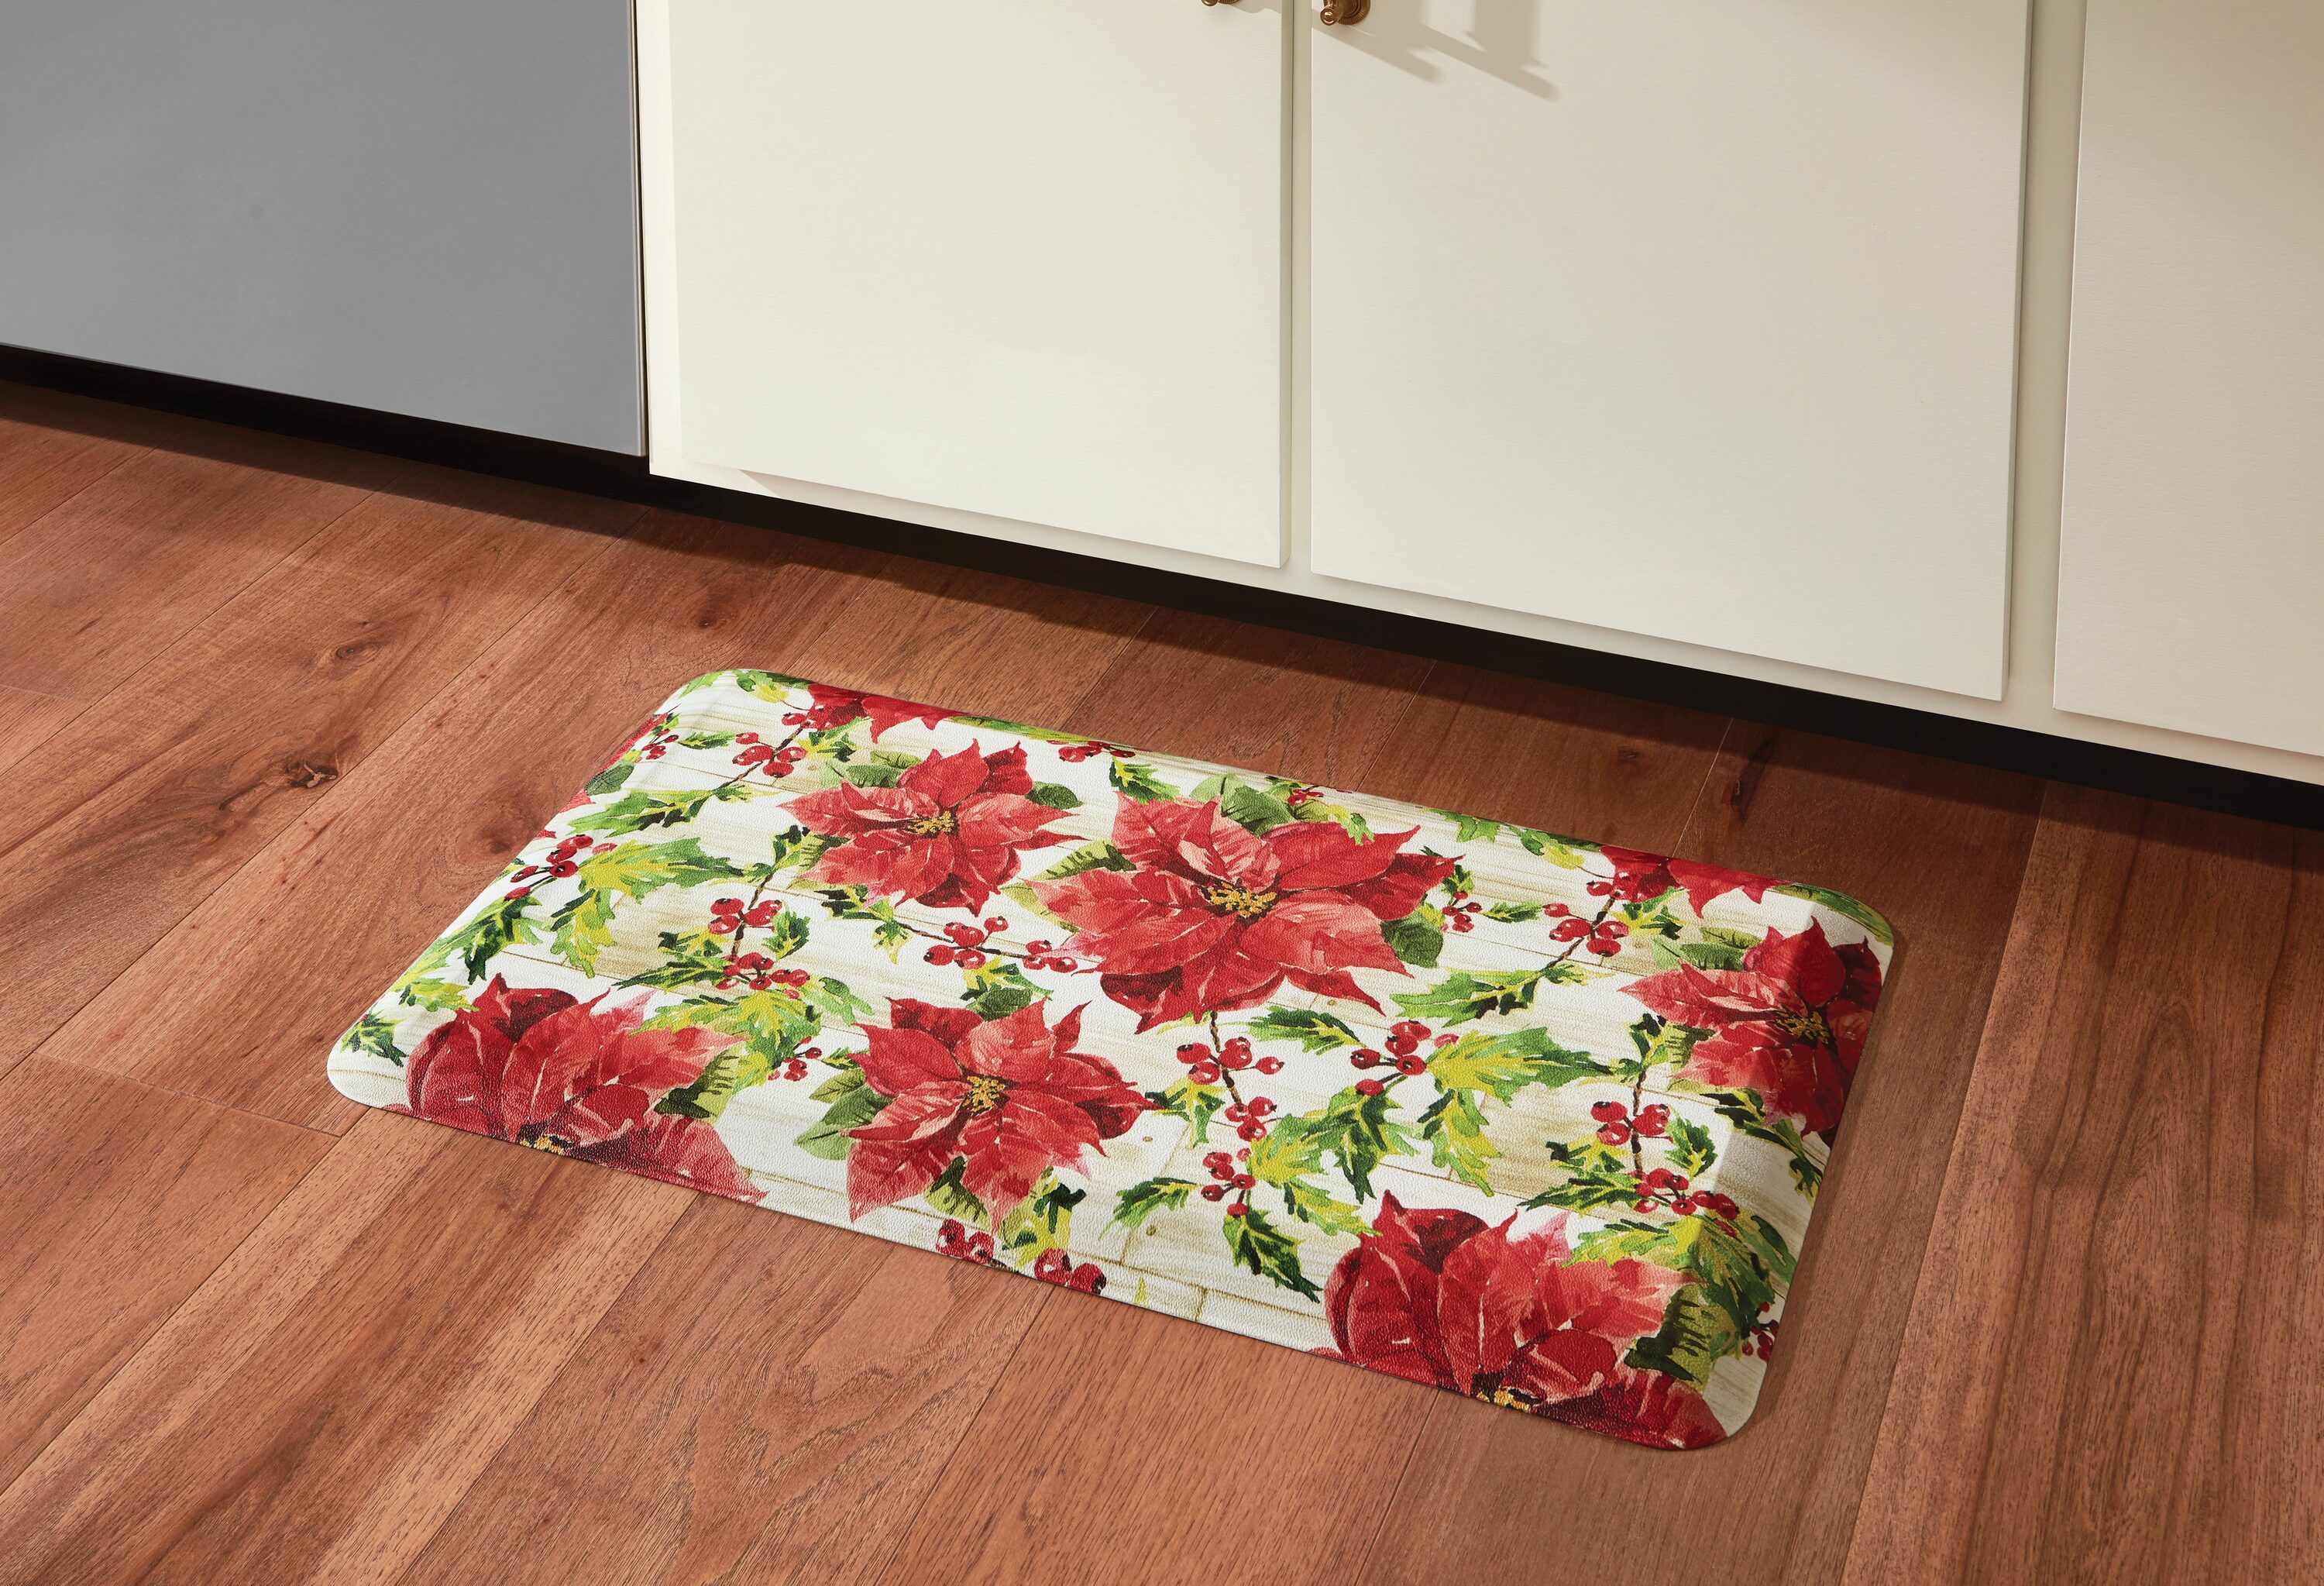 Water Resistant Non Slip Kitchen Floor Mats at